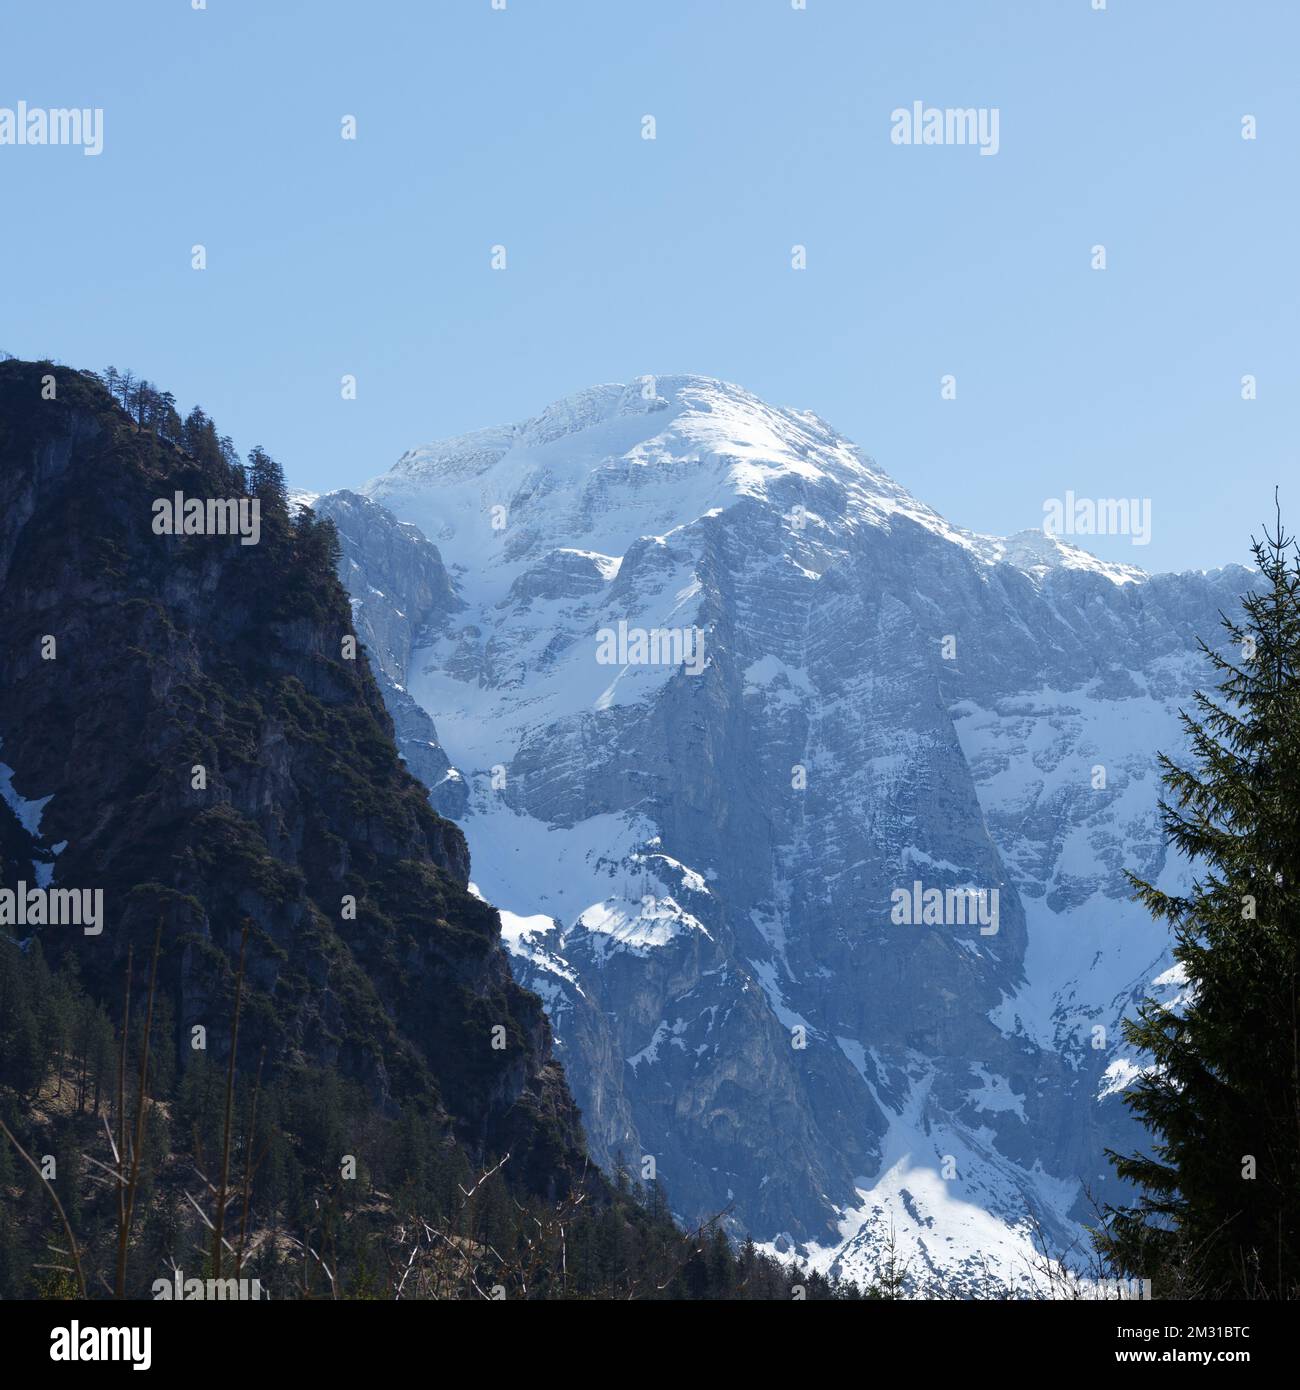 Snowy Mountain Range and Blue Sky in Austria Panorama Stock Photo